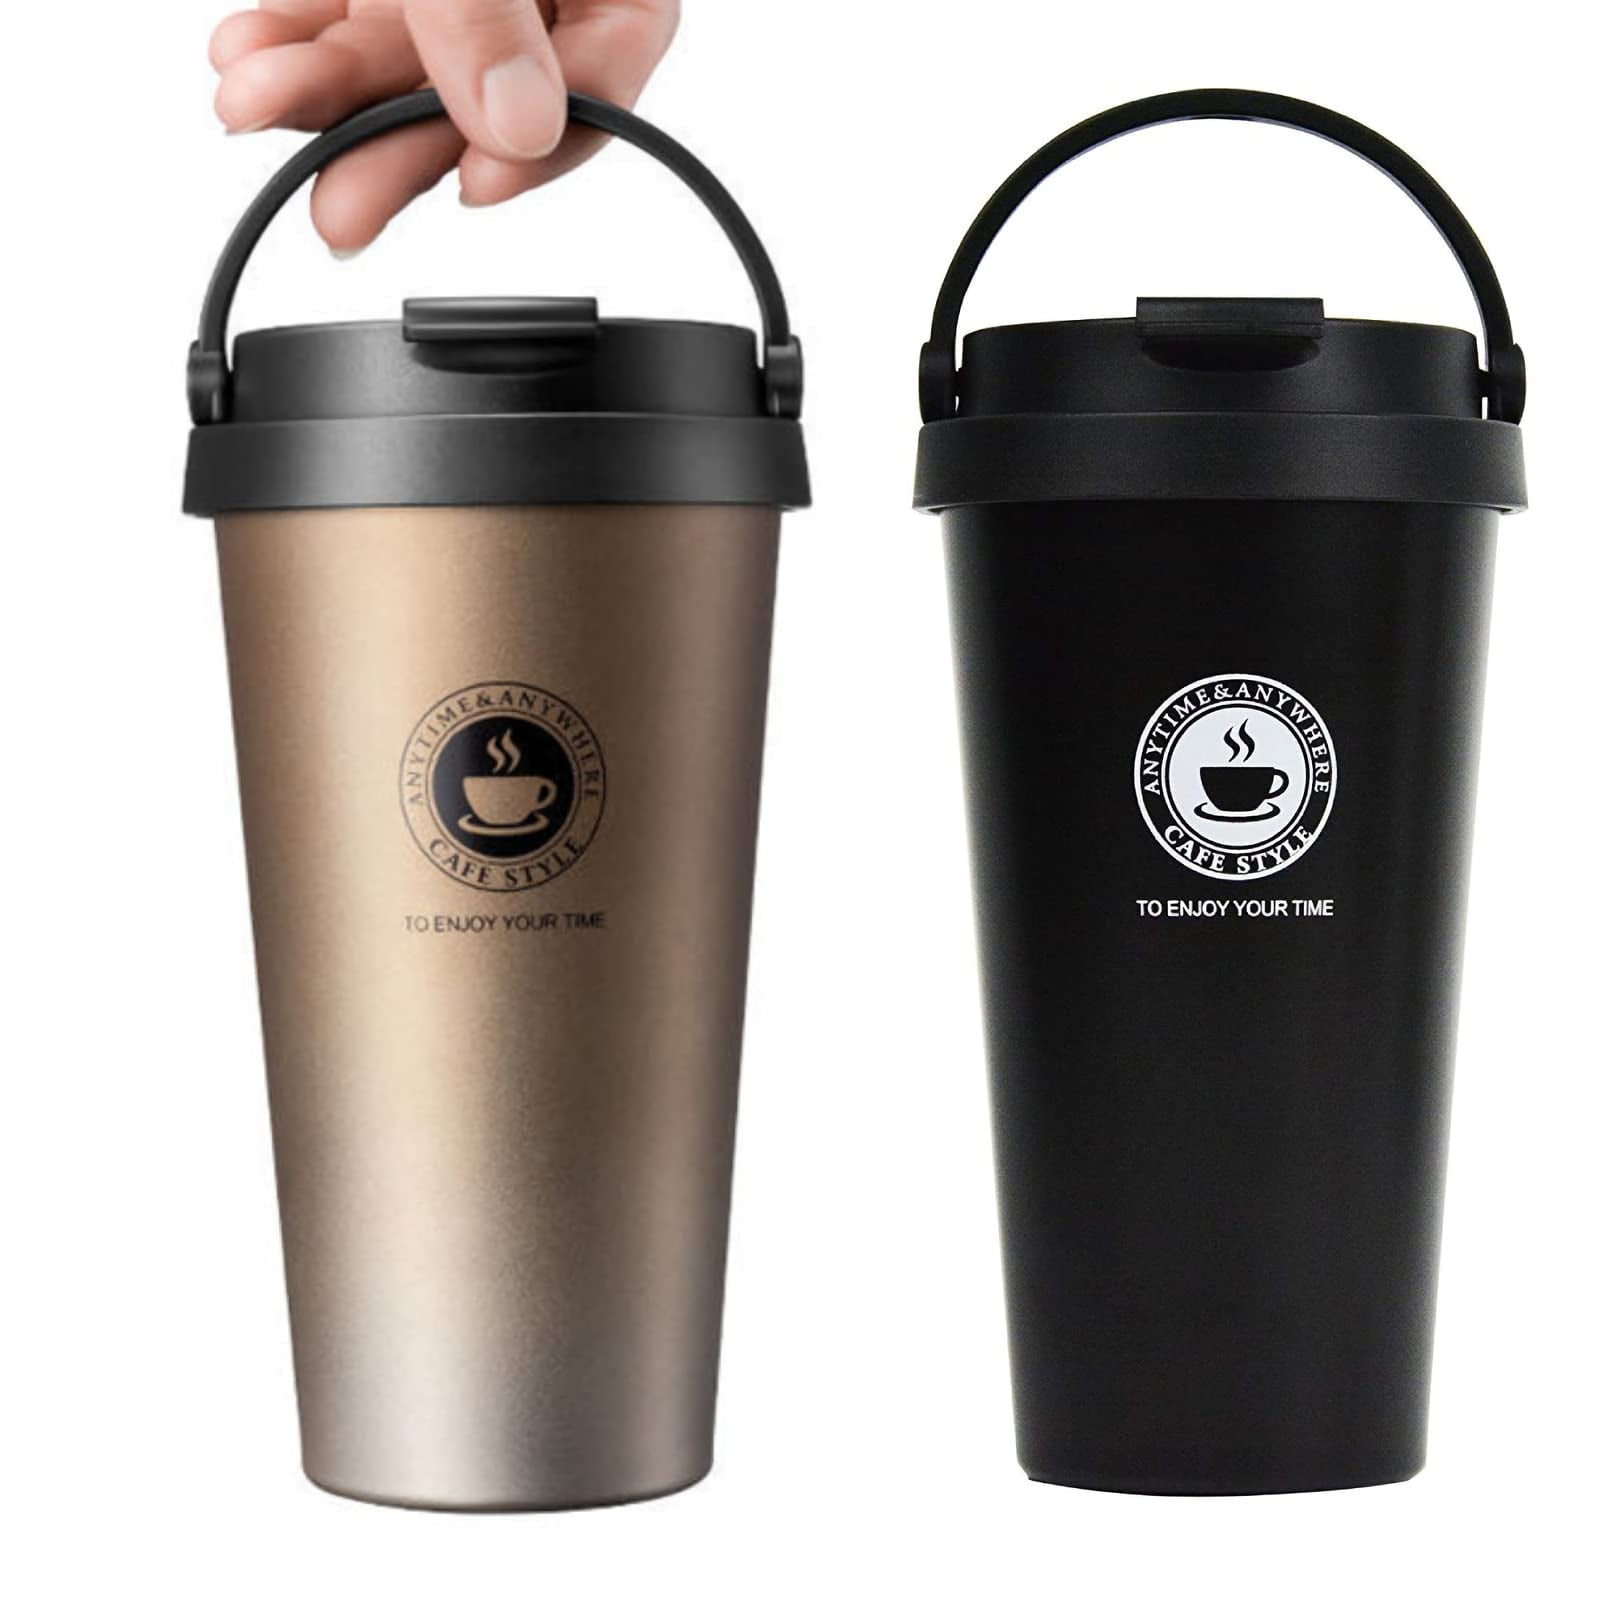 17 oz Travel Coffee Mug, Vacuum Insulated Coffee Travel Mug Spill